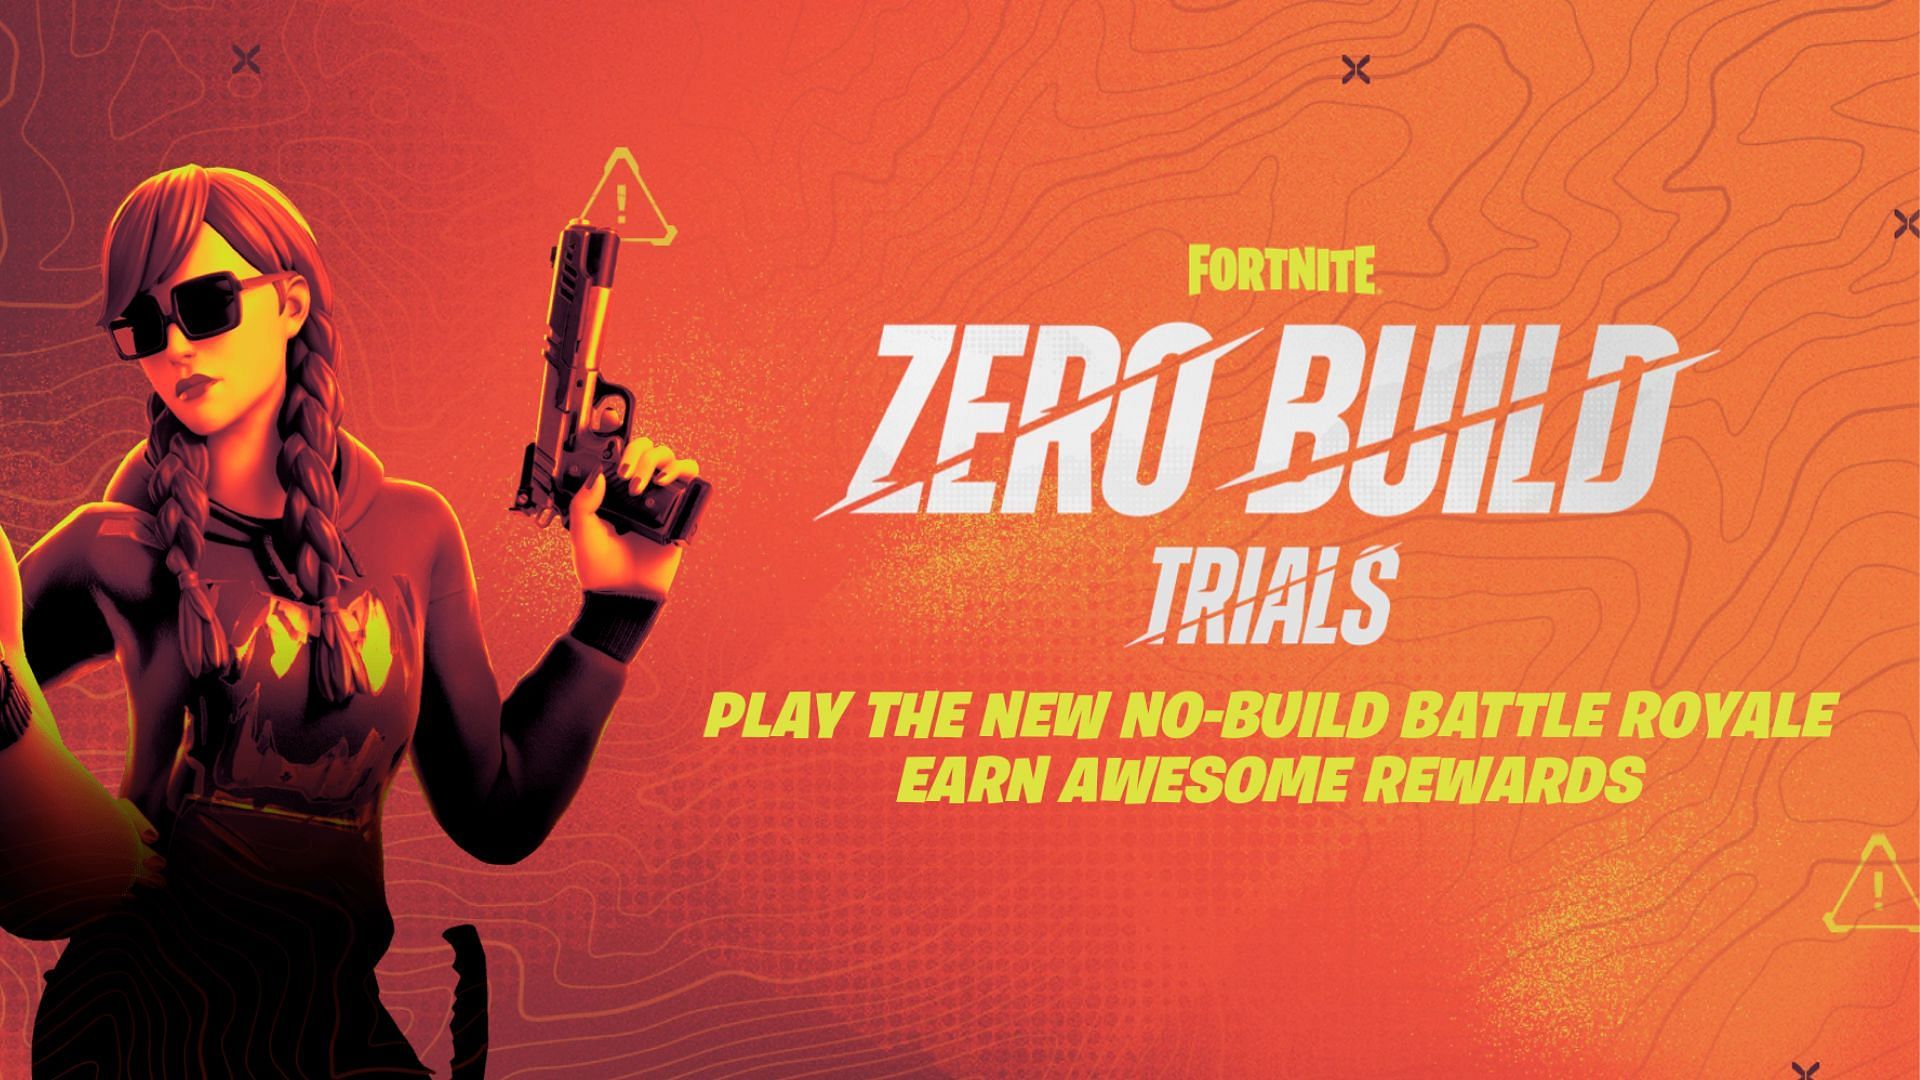 Fortnite Zero Build Trials released (Image via Epic Games)